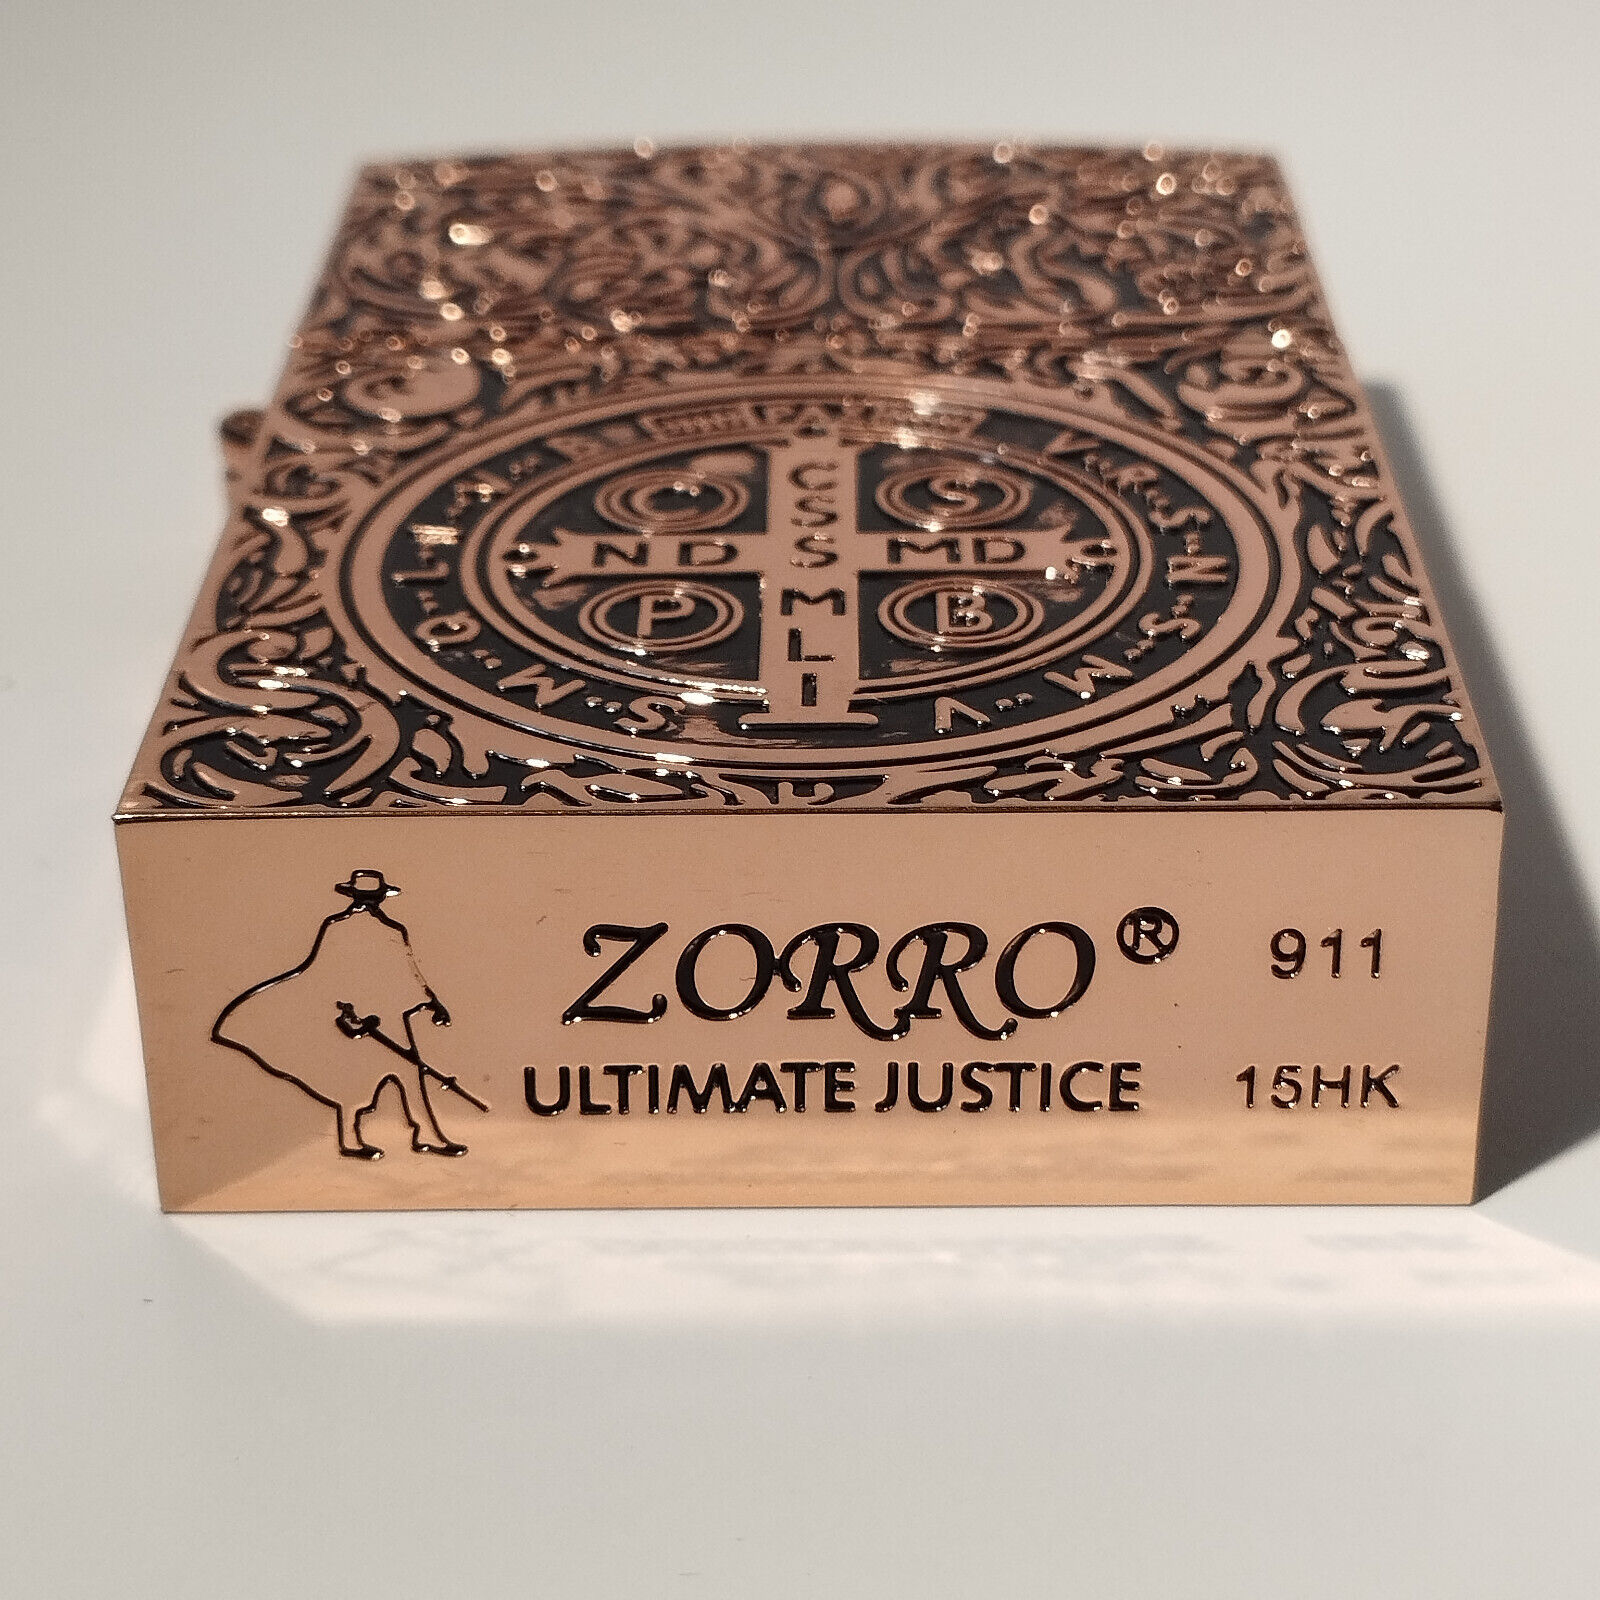 Zorro 911 Constantine Rose Gold Lighter (with Gift Box) - 1:1 Movie Replica